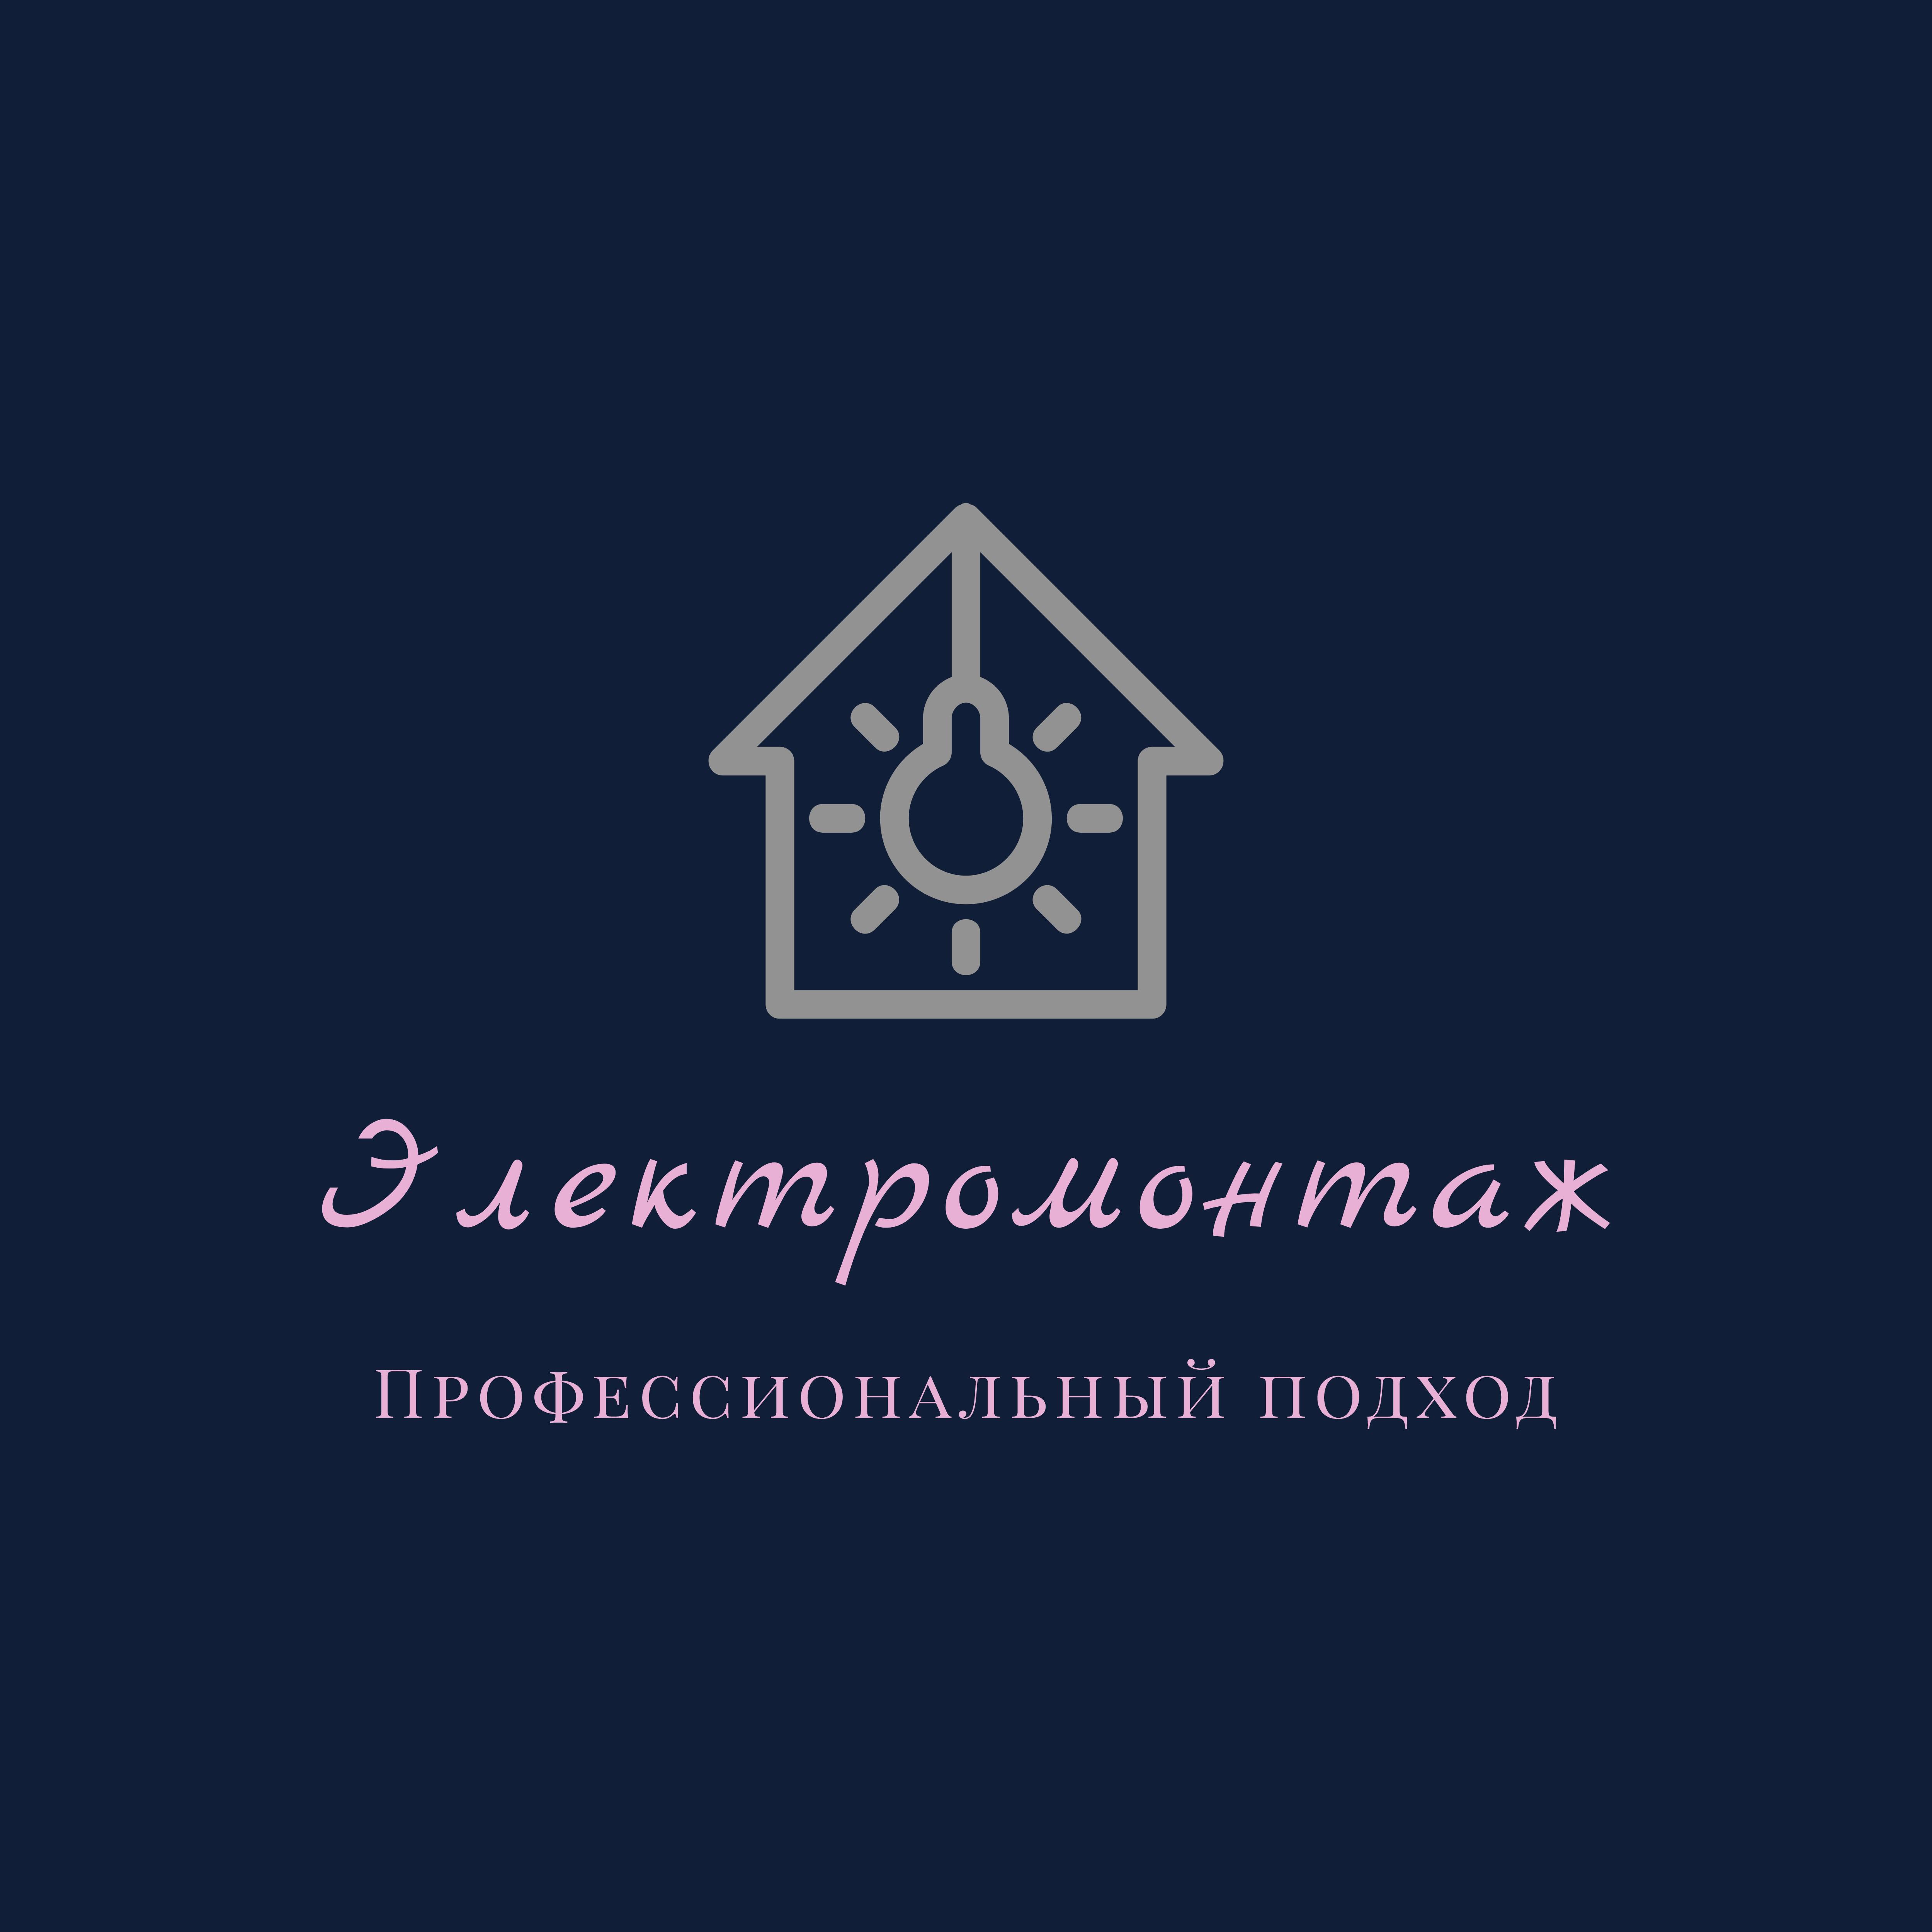 Электромонтаж Logo